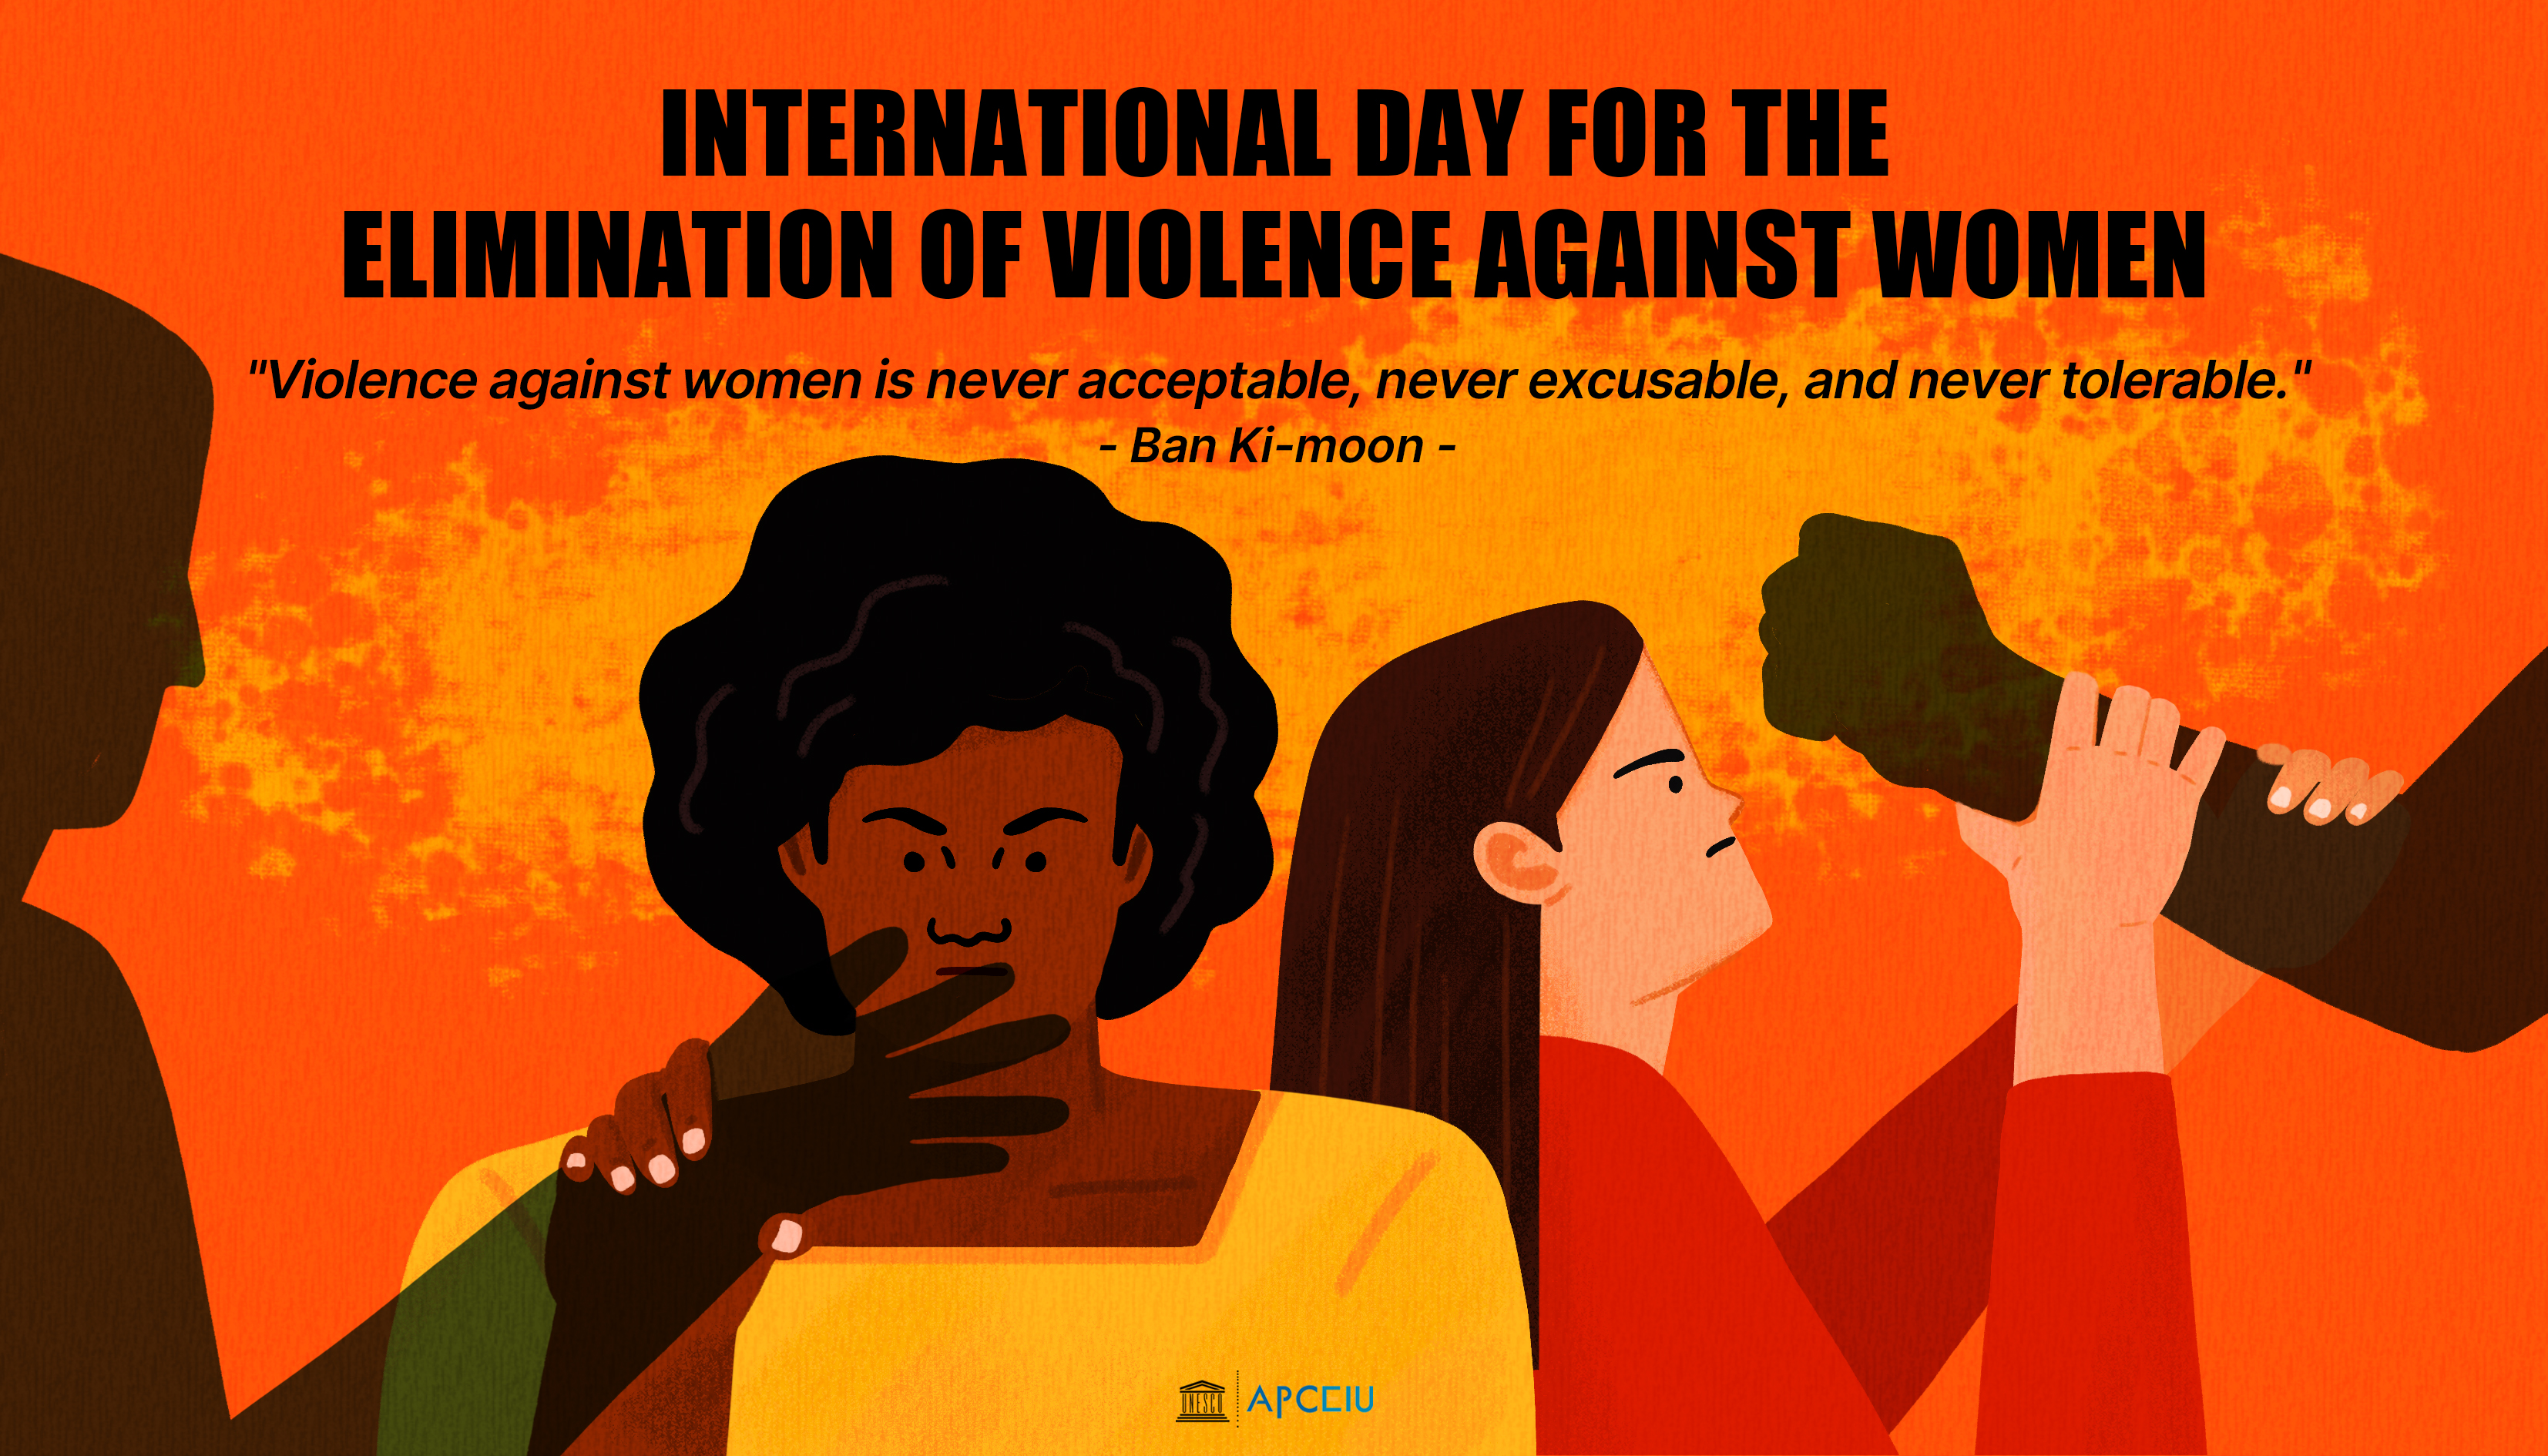 International day for the elimination of violence against women illustration.jpg